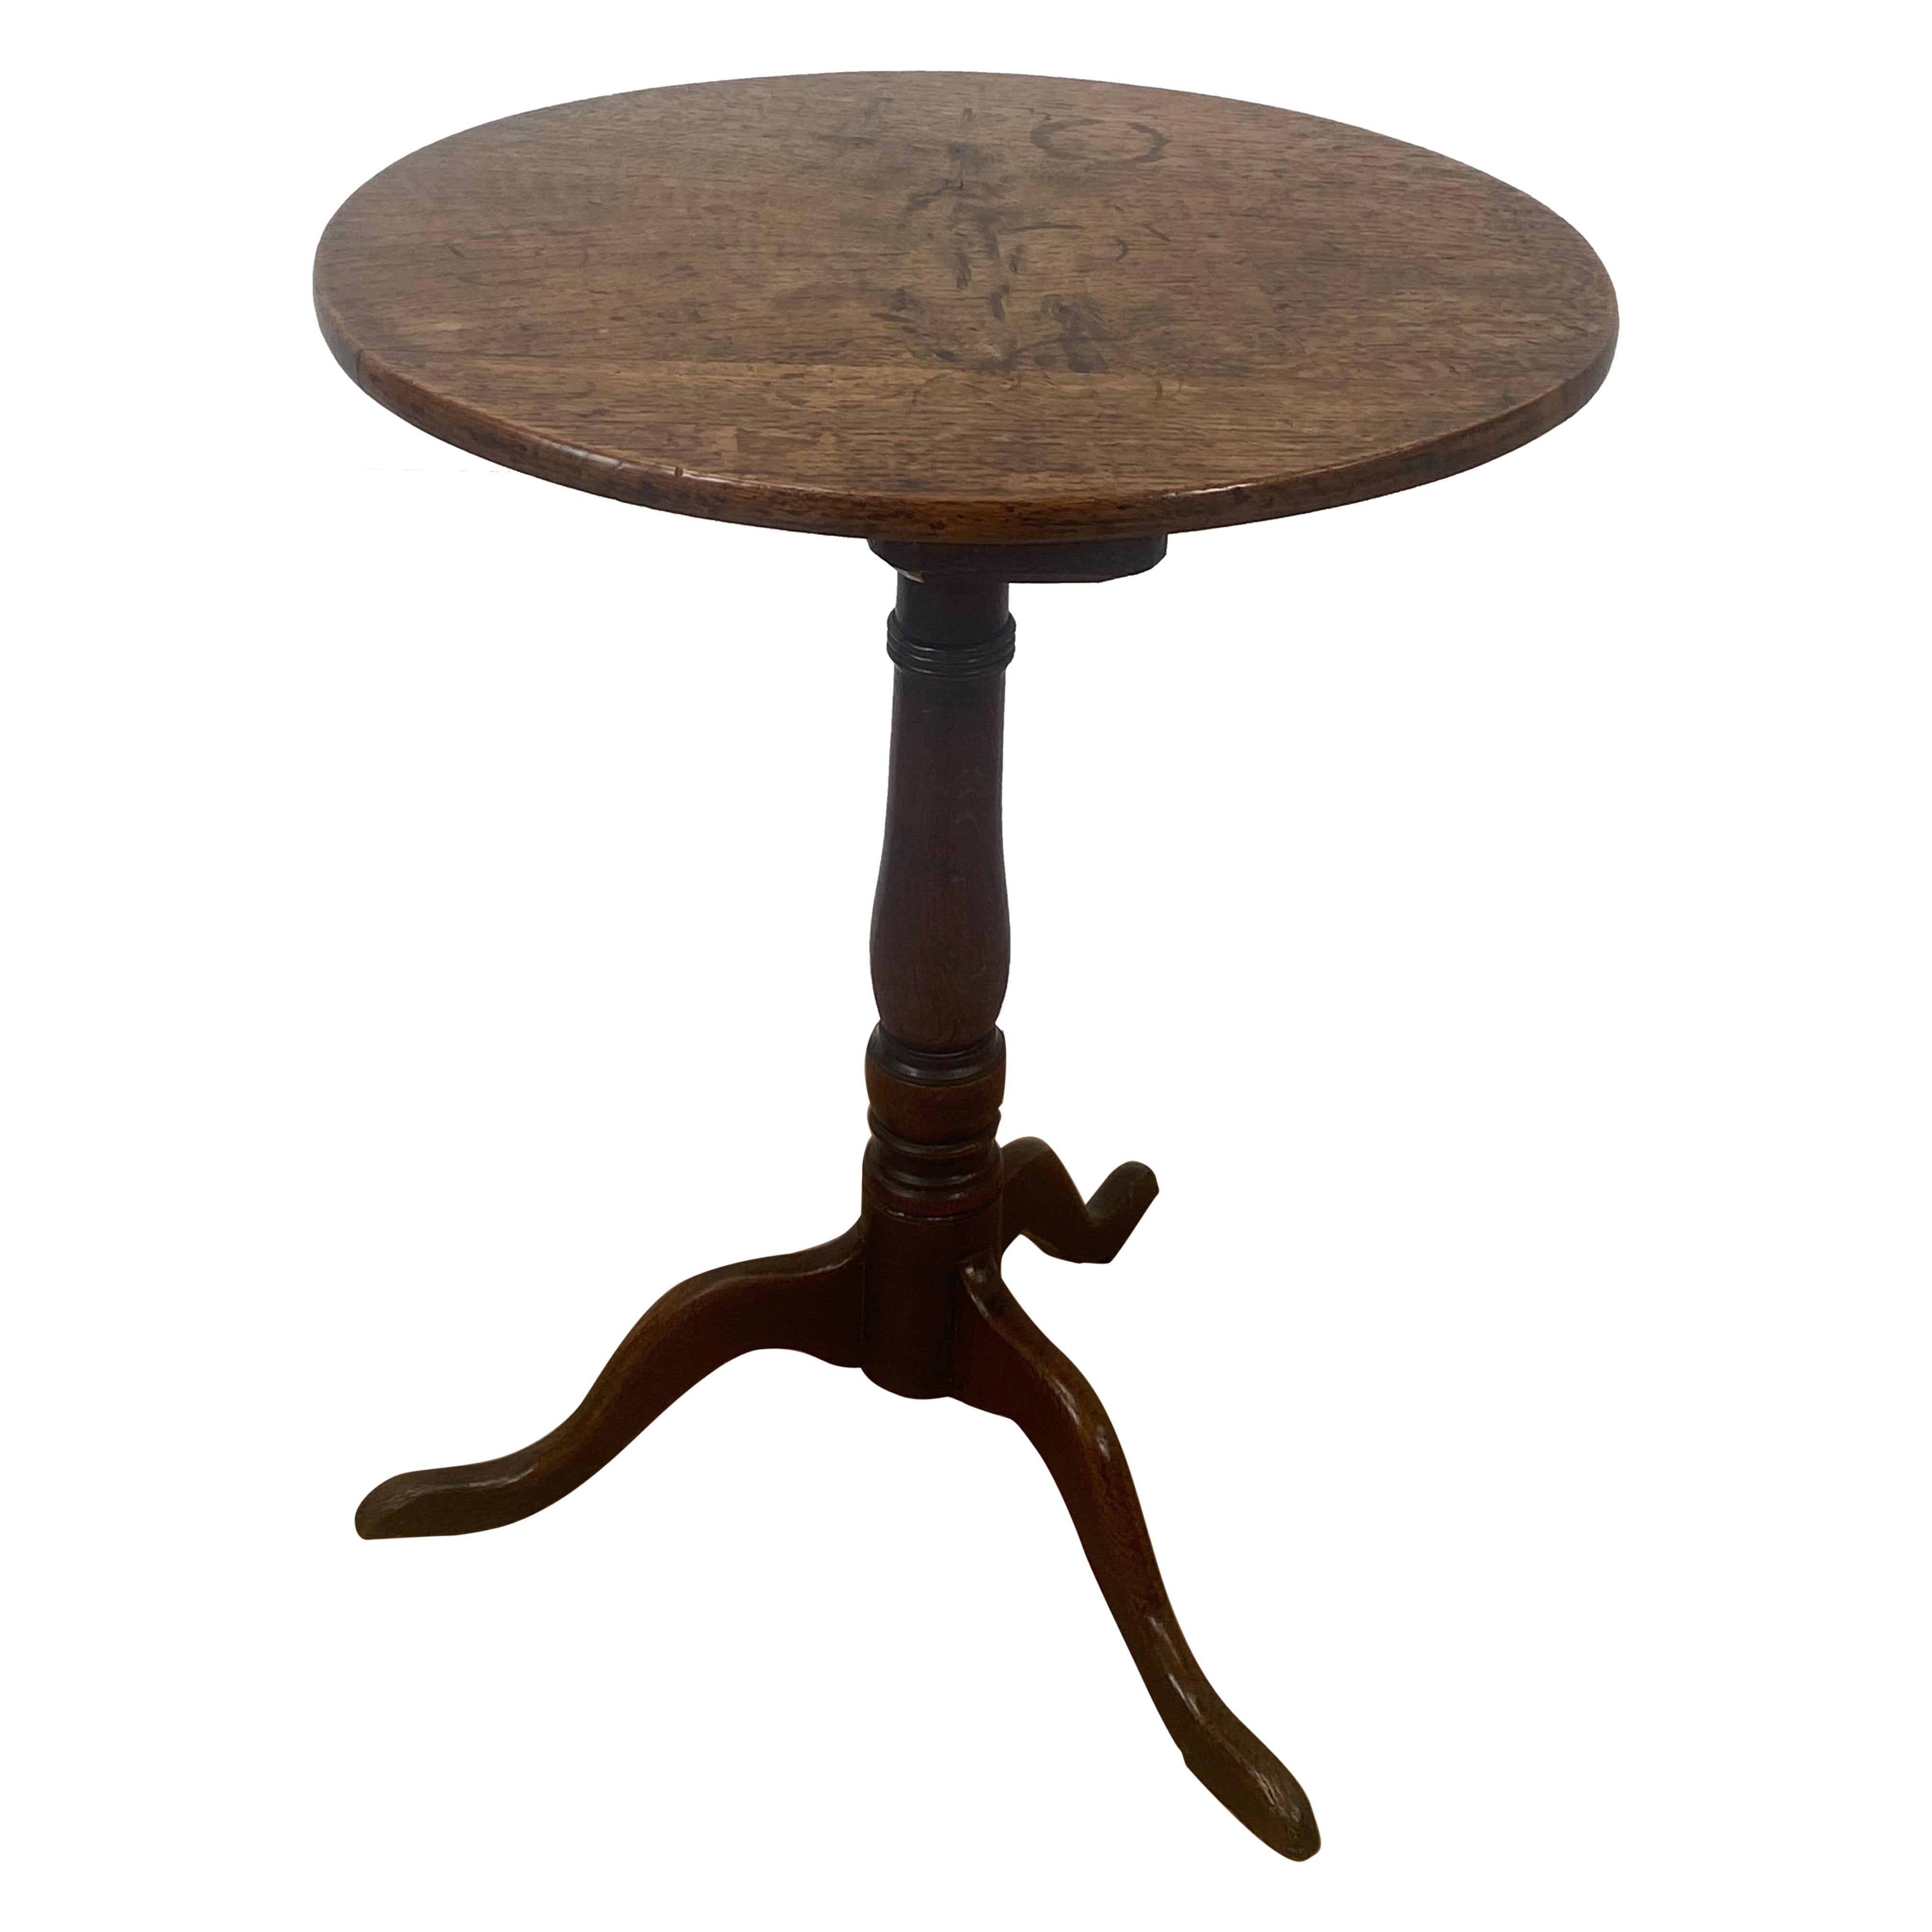 Antique, English Tripod Table in Oak